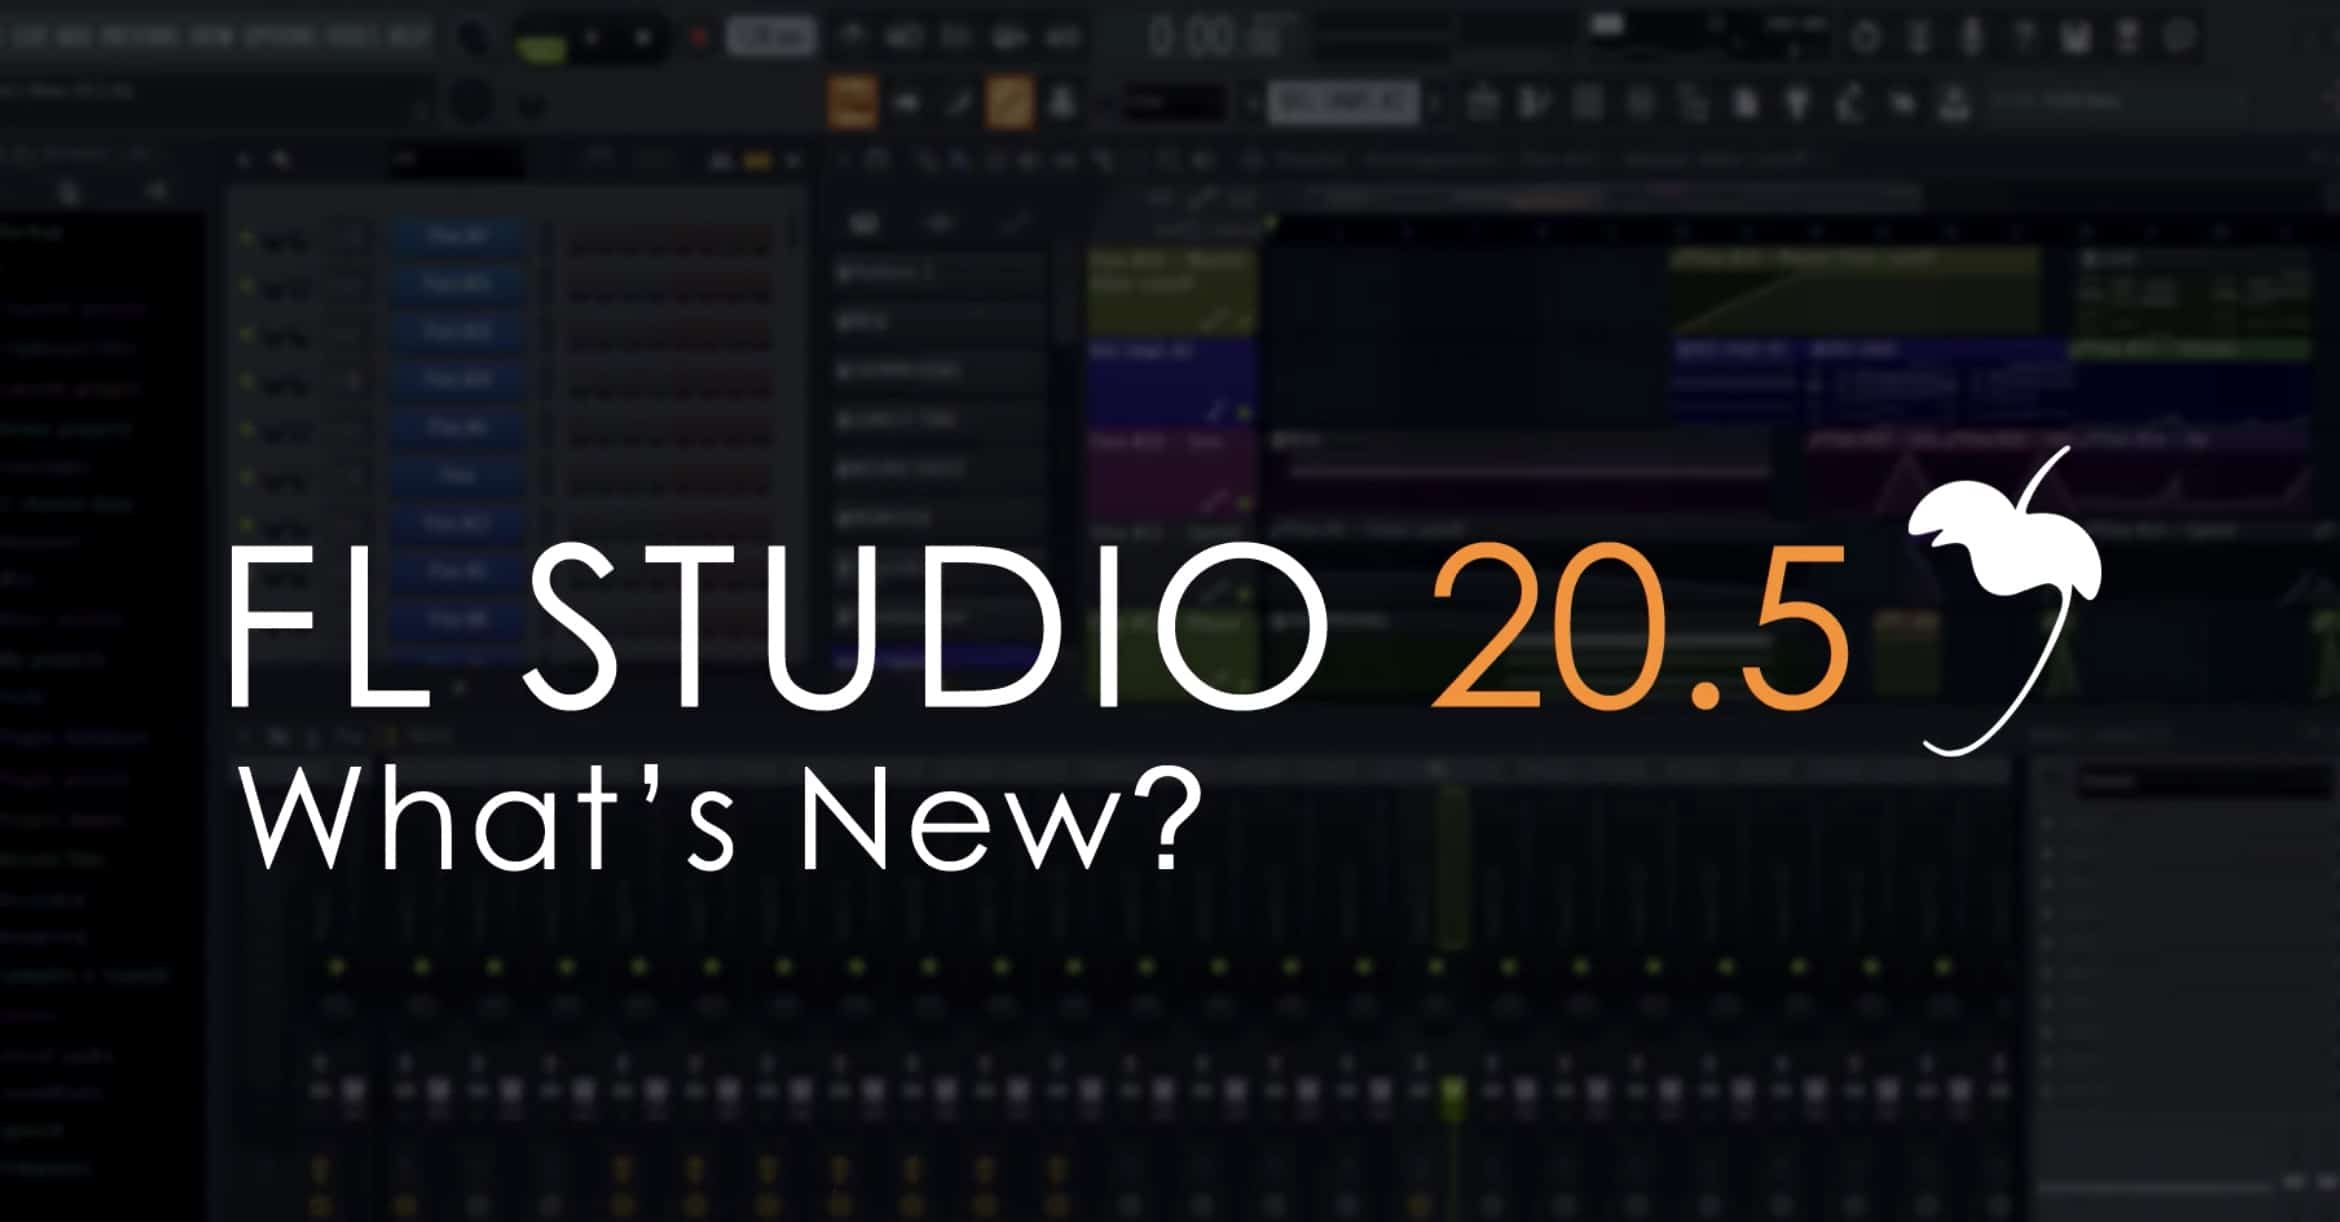 FL STUDIO 20.5 Released